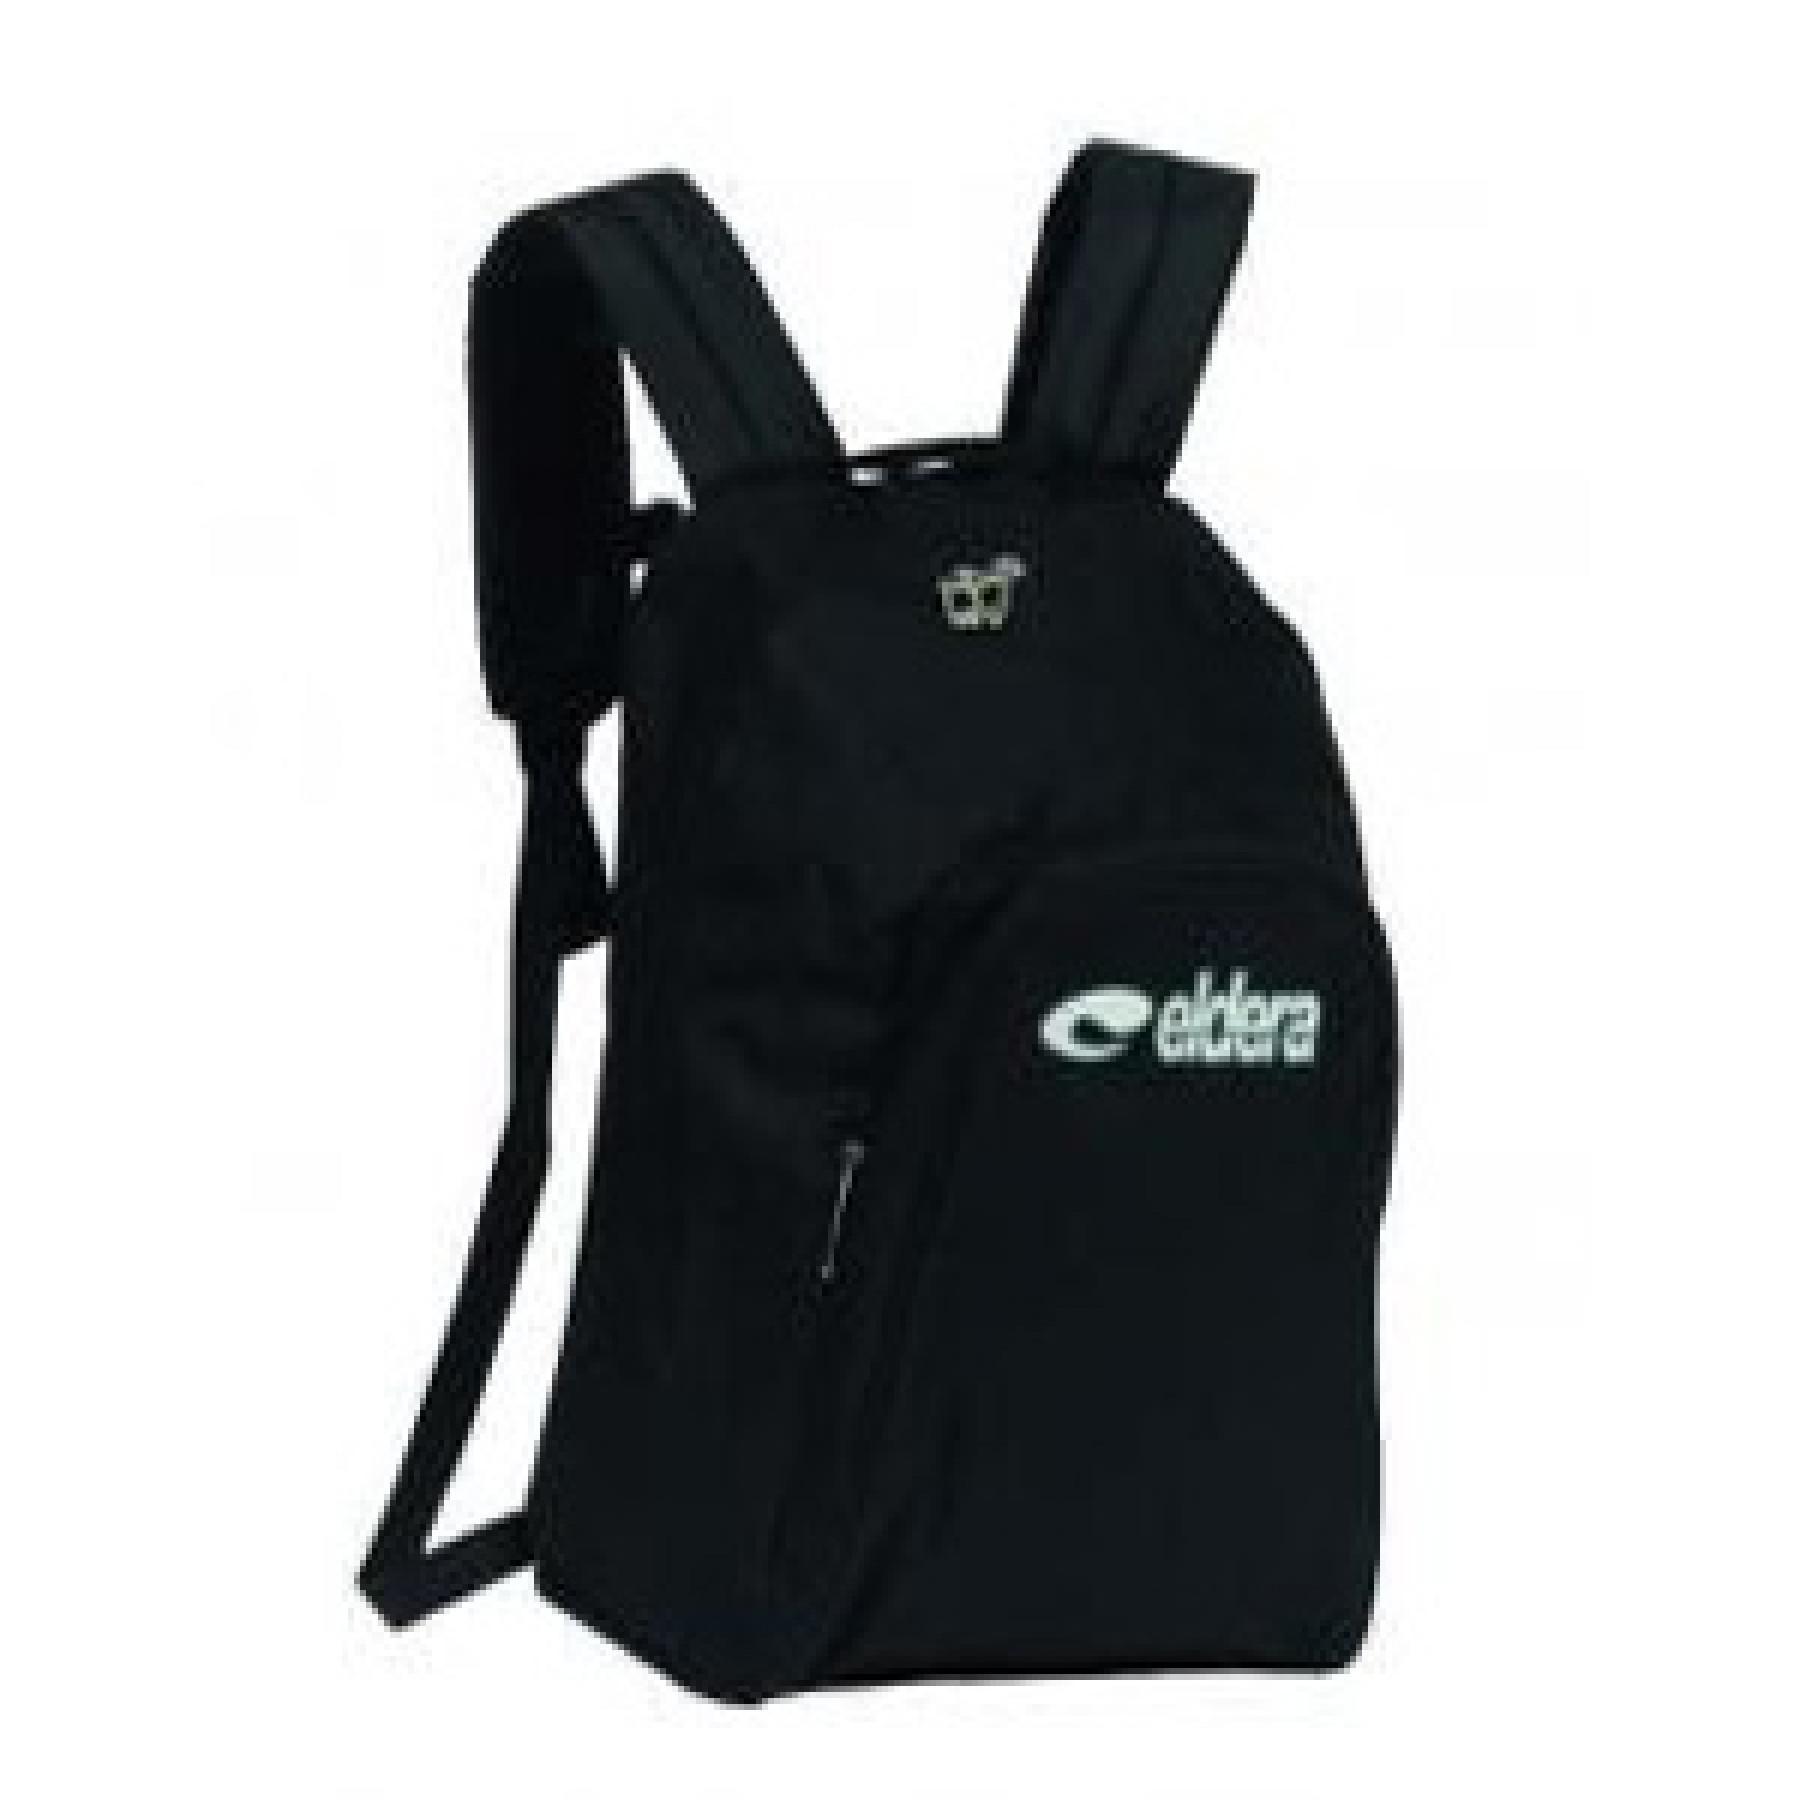 Backpack Eldera